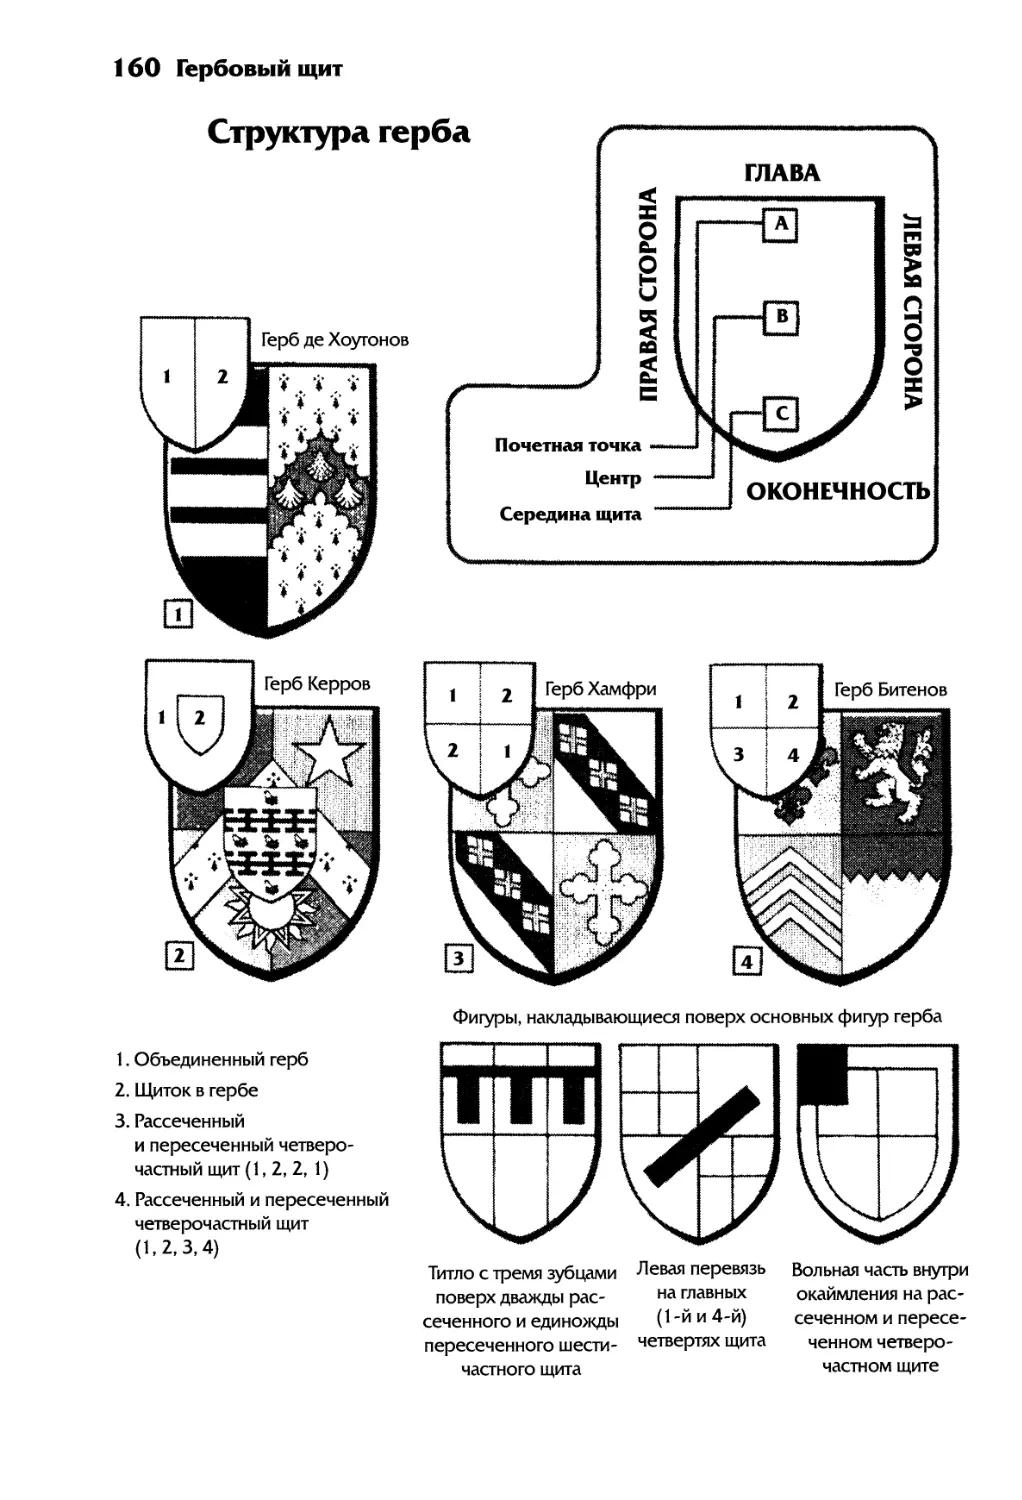 Структура герба